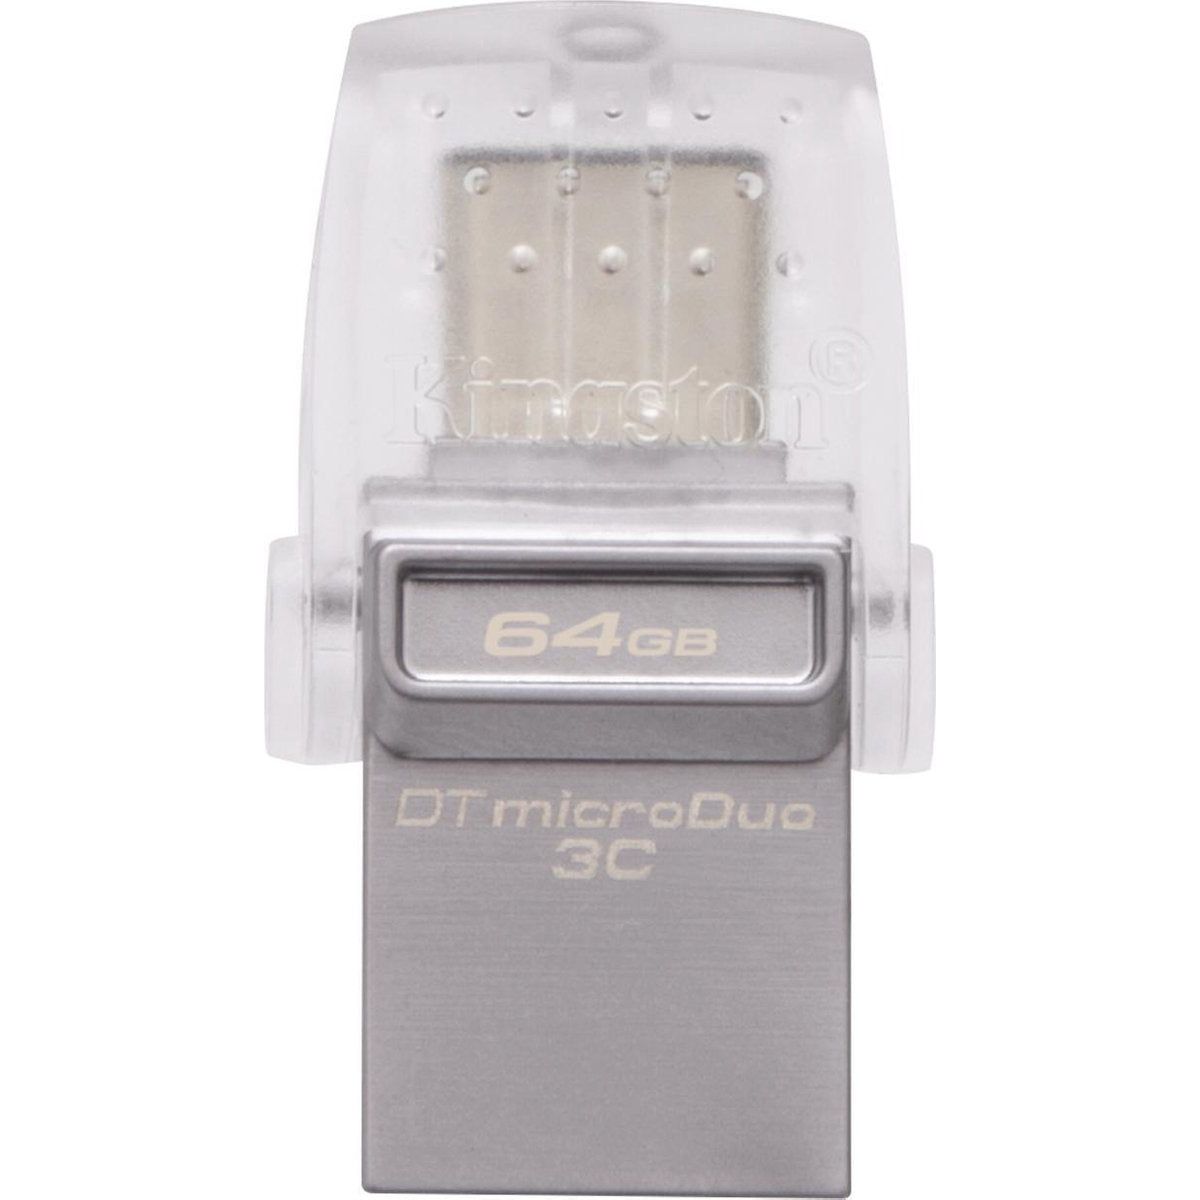 Kingston Dual Port microDuo 3C - DUO USB stick - 64 GB - NLMAX